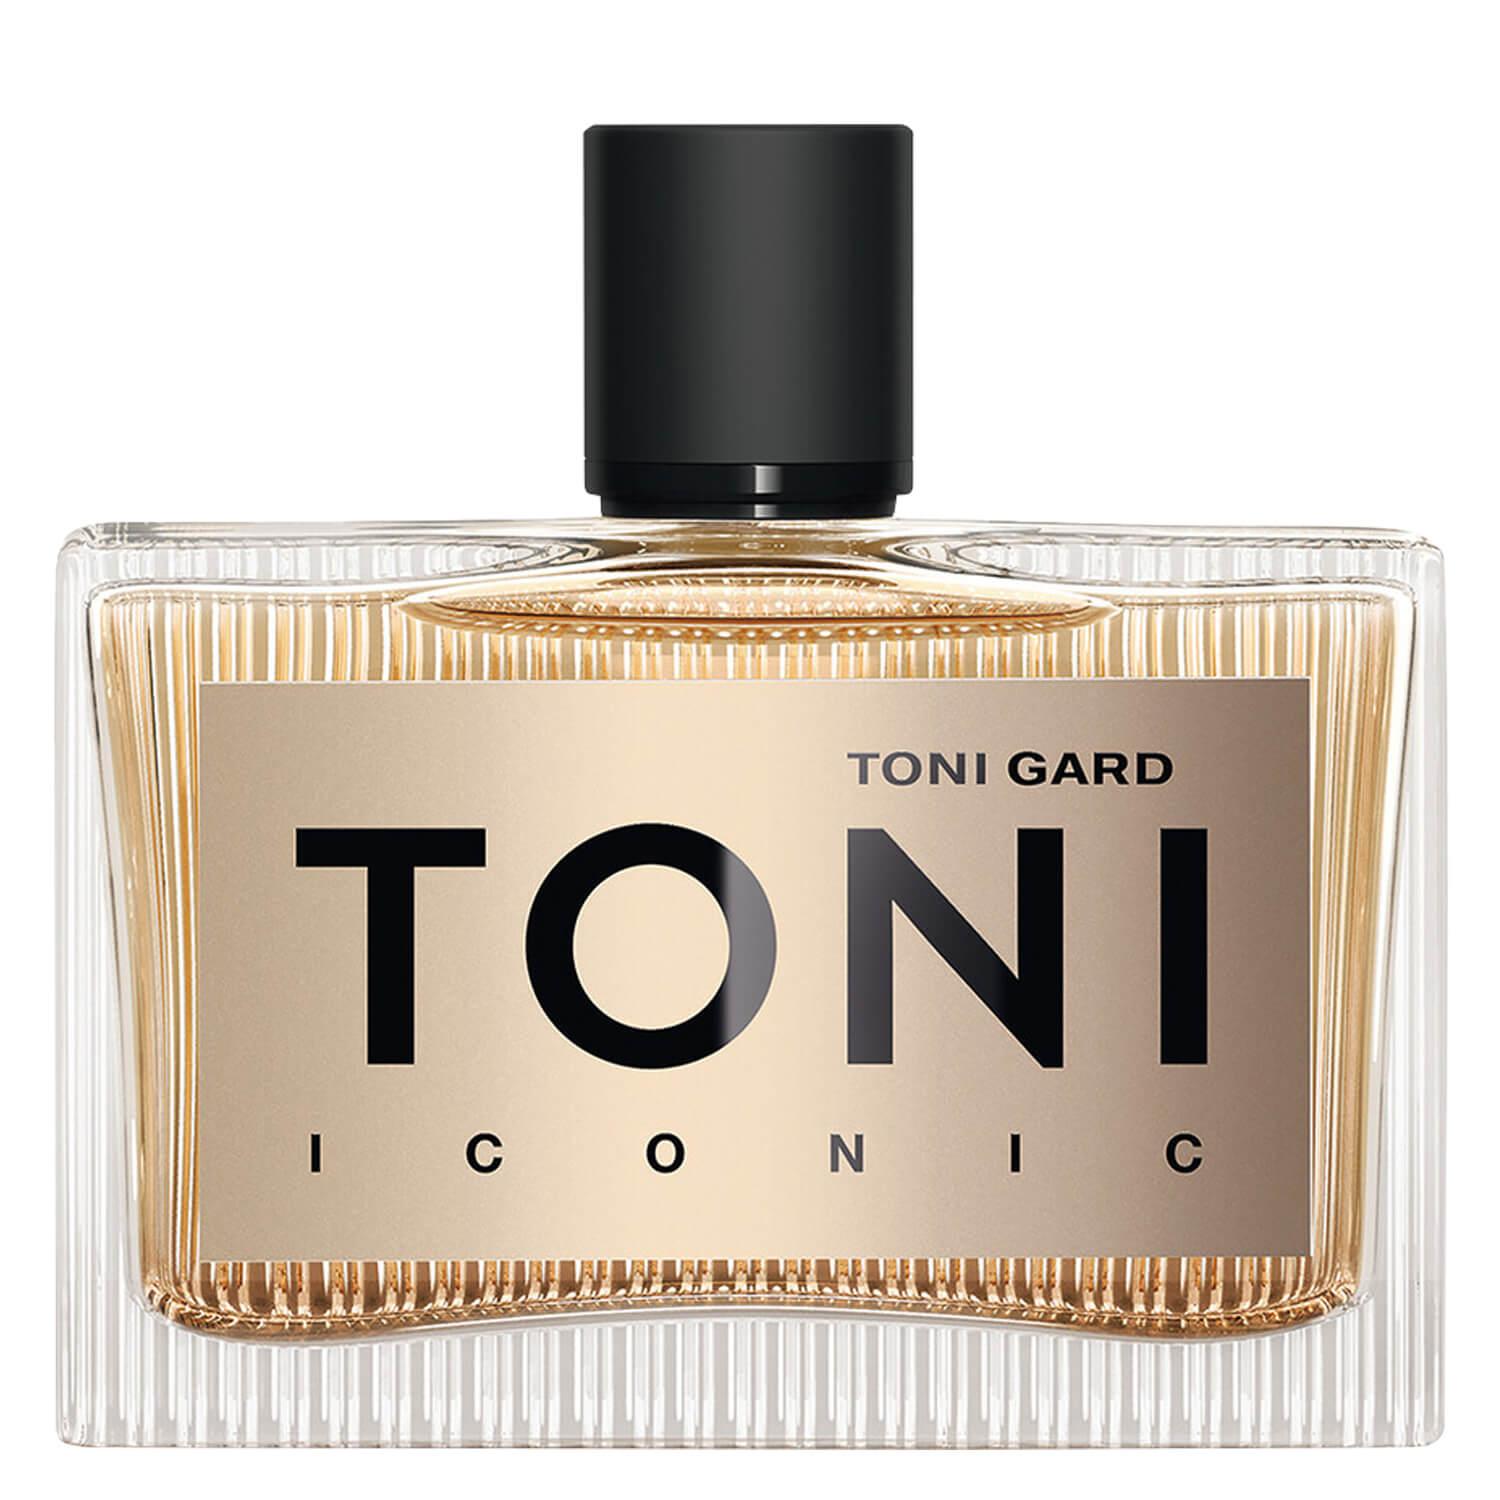 TONI GARD - Toni Iconic Woman Eau de Parfum